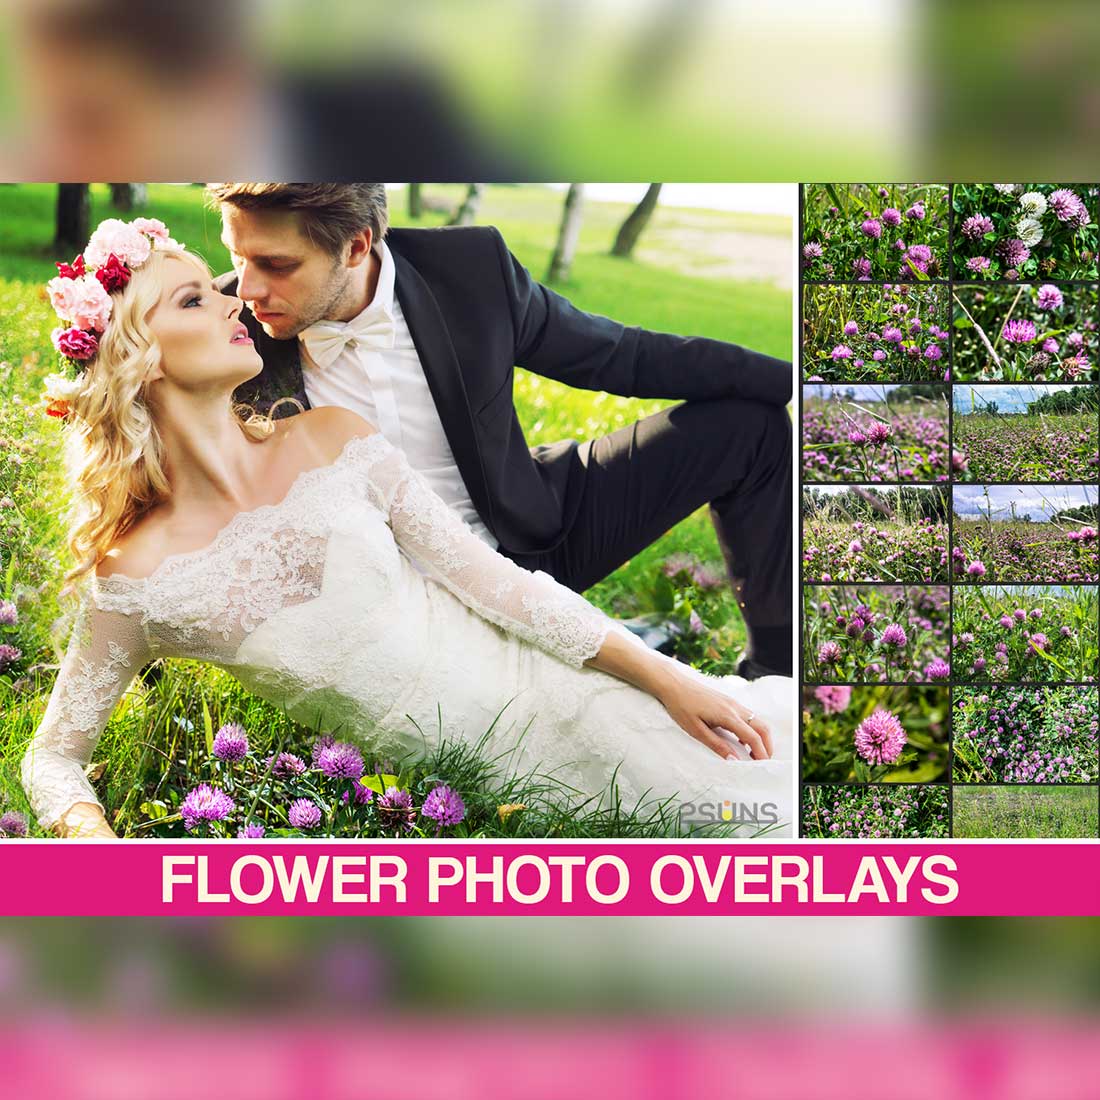 Digital Flower Backdrop Photoshop Overlay Cover Image.